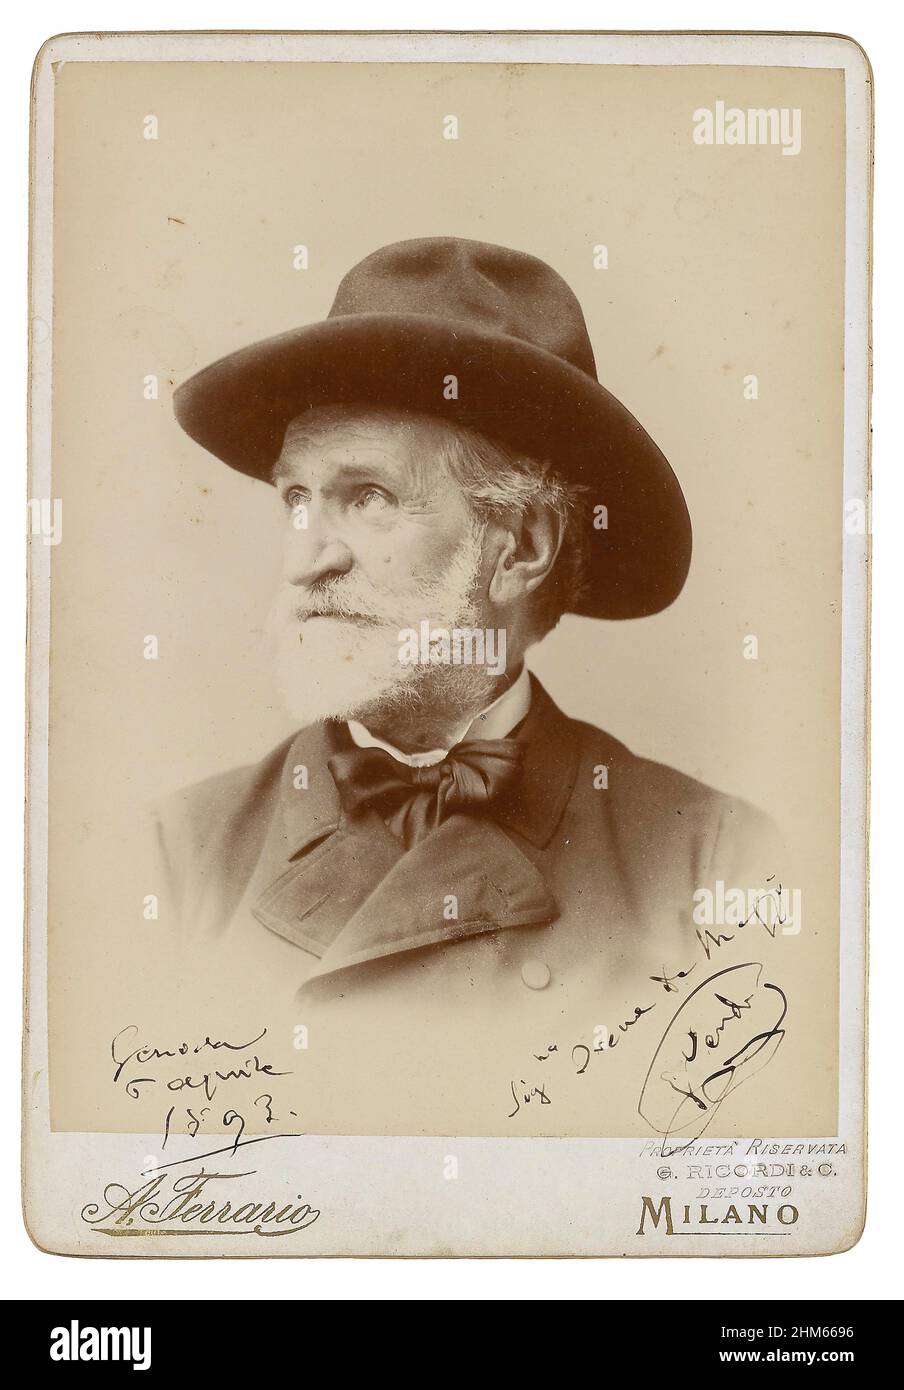 Giuseppe Verdi portrait photo 1893, Milano. Stock Photo